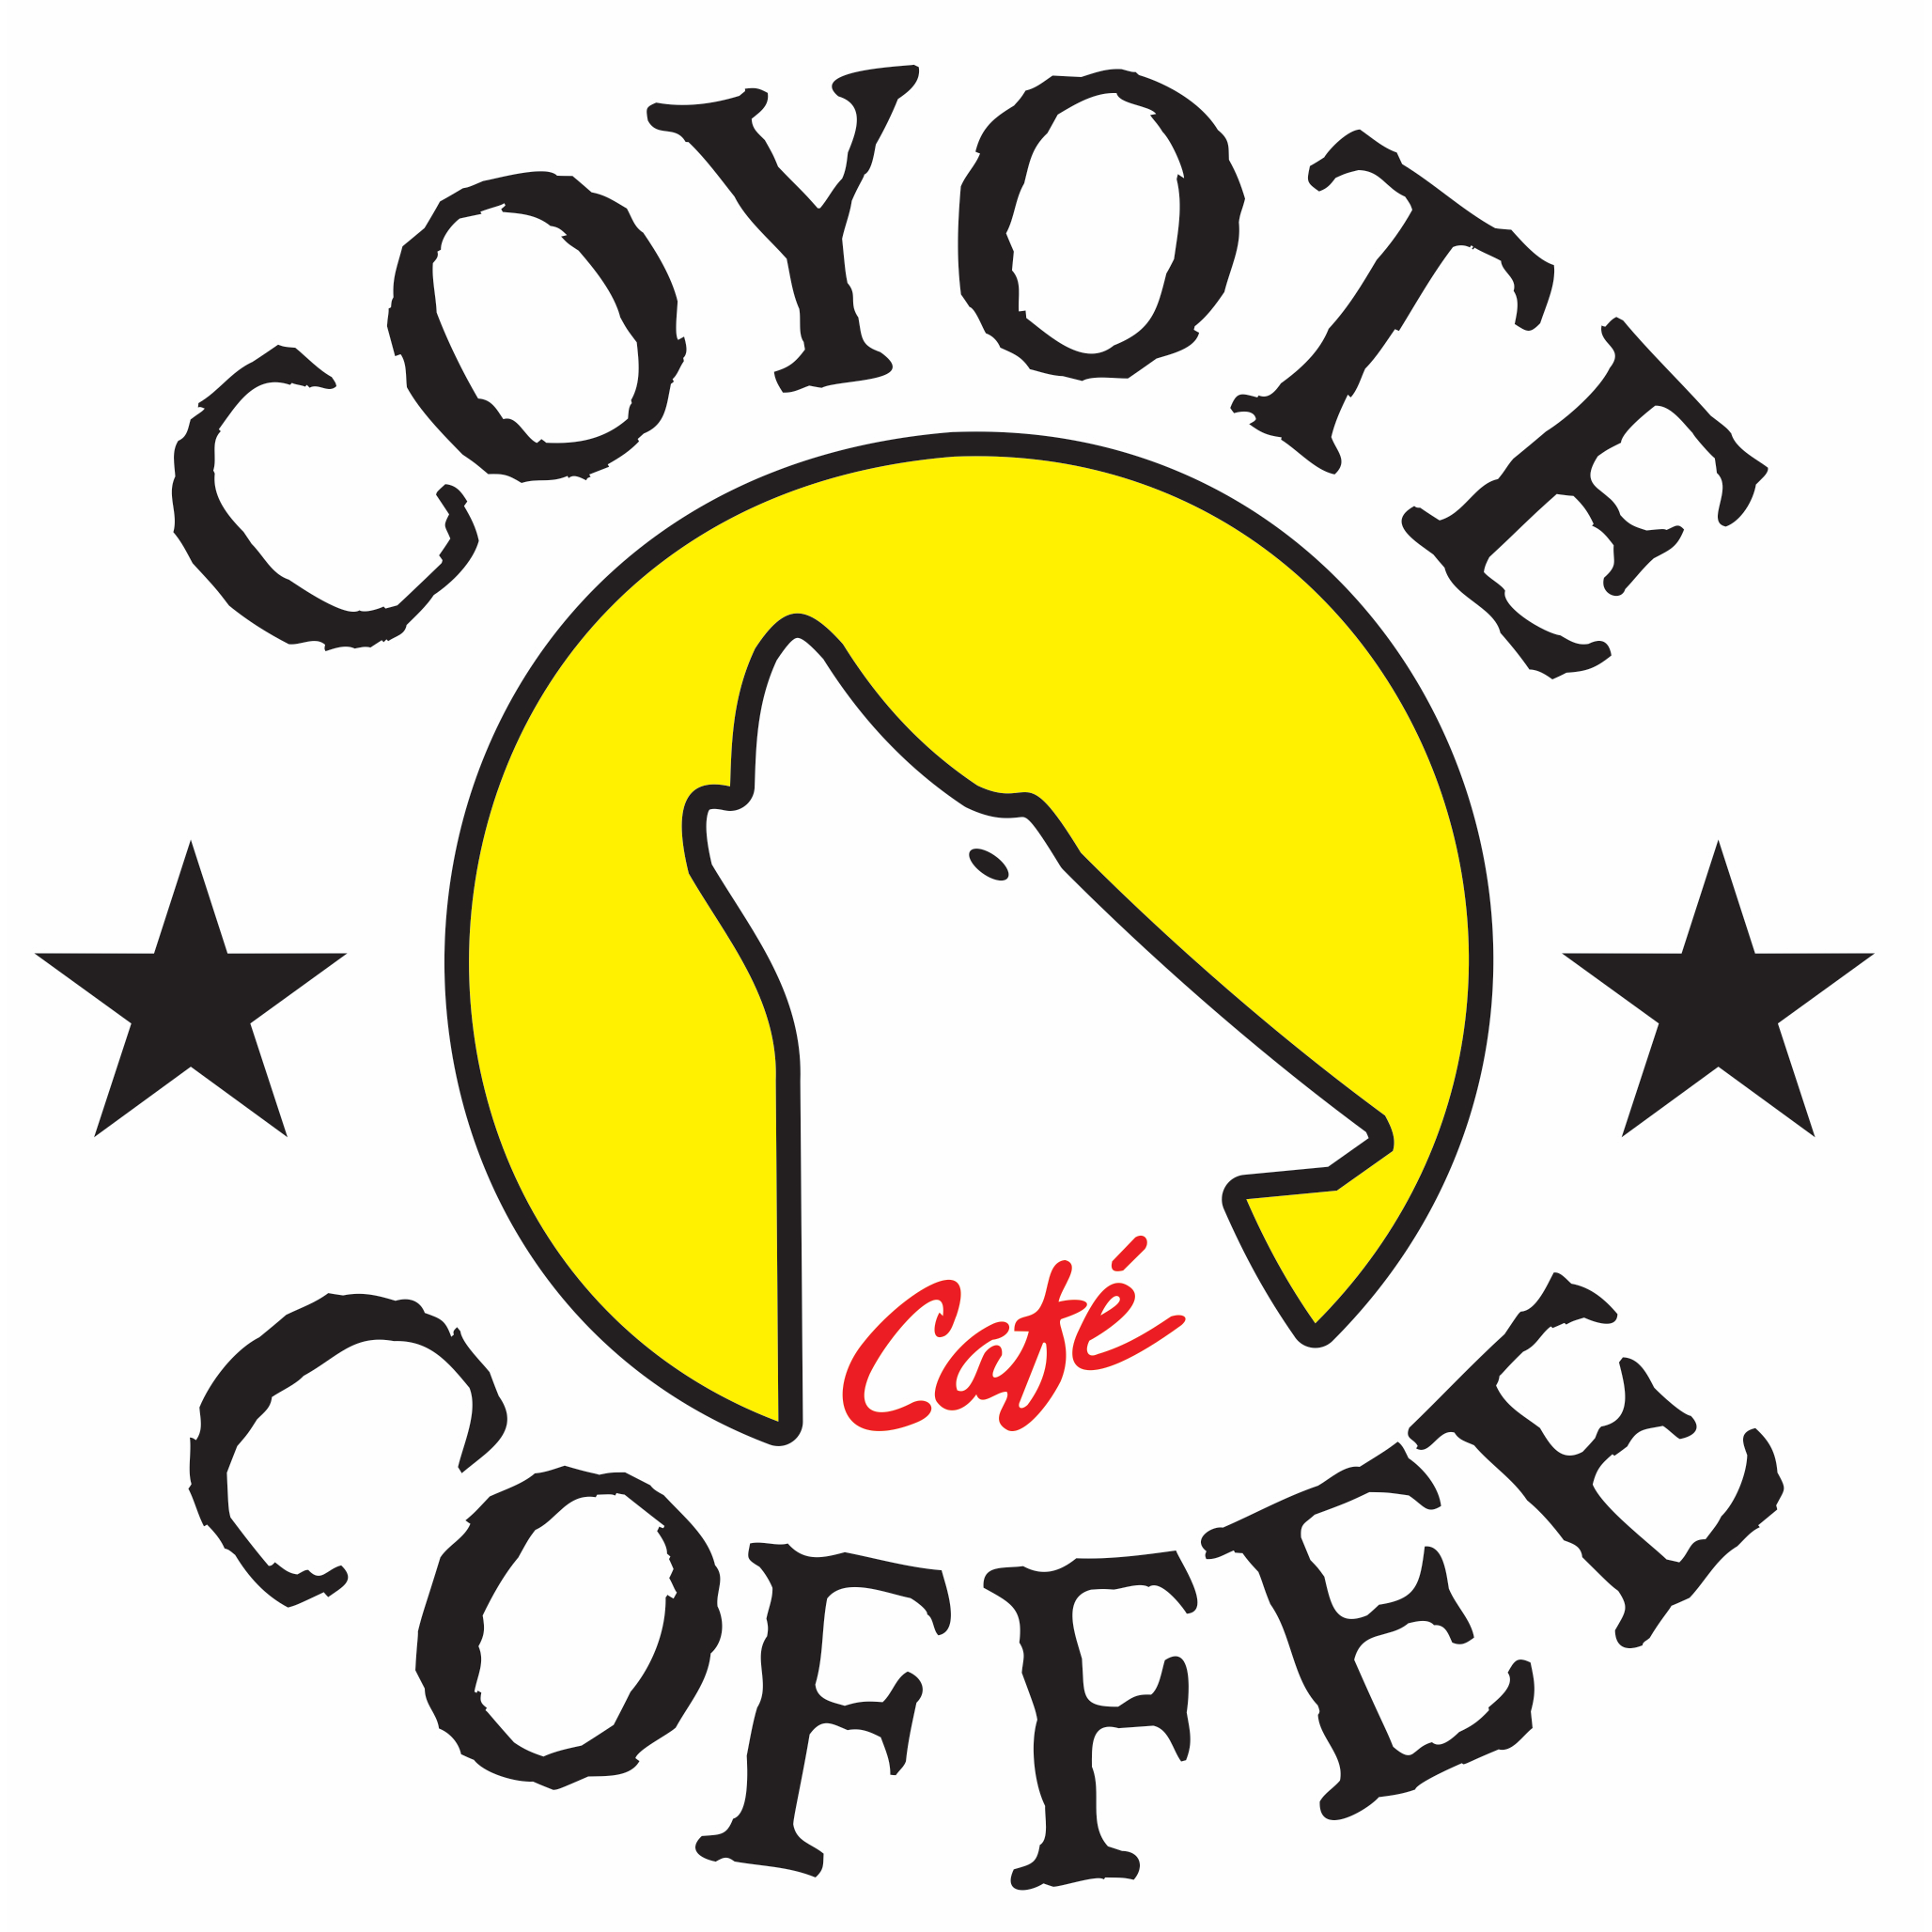 Coyote Coffee Cafe - Powdersville - Greenville, SC 29611 - (864)509-0334 | ShowMeLocal.com